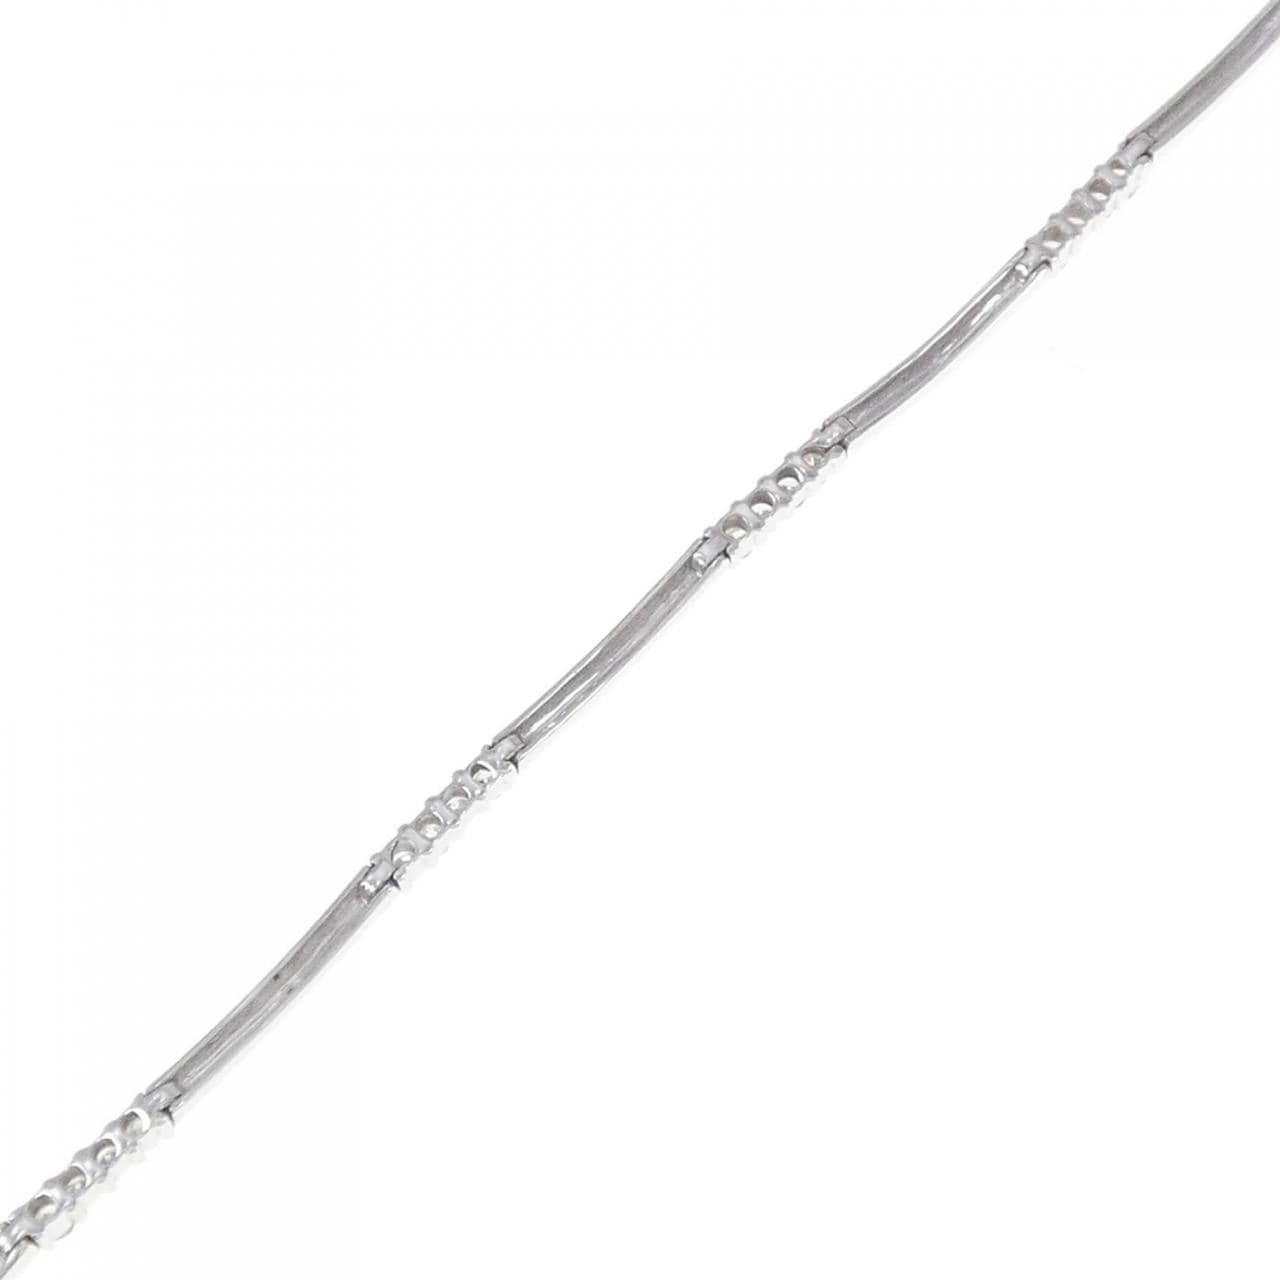 K18WG Diamond bracelet 0.56CT